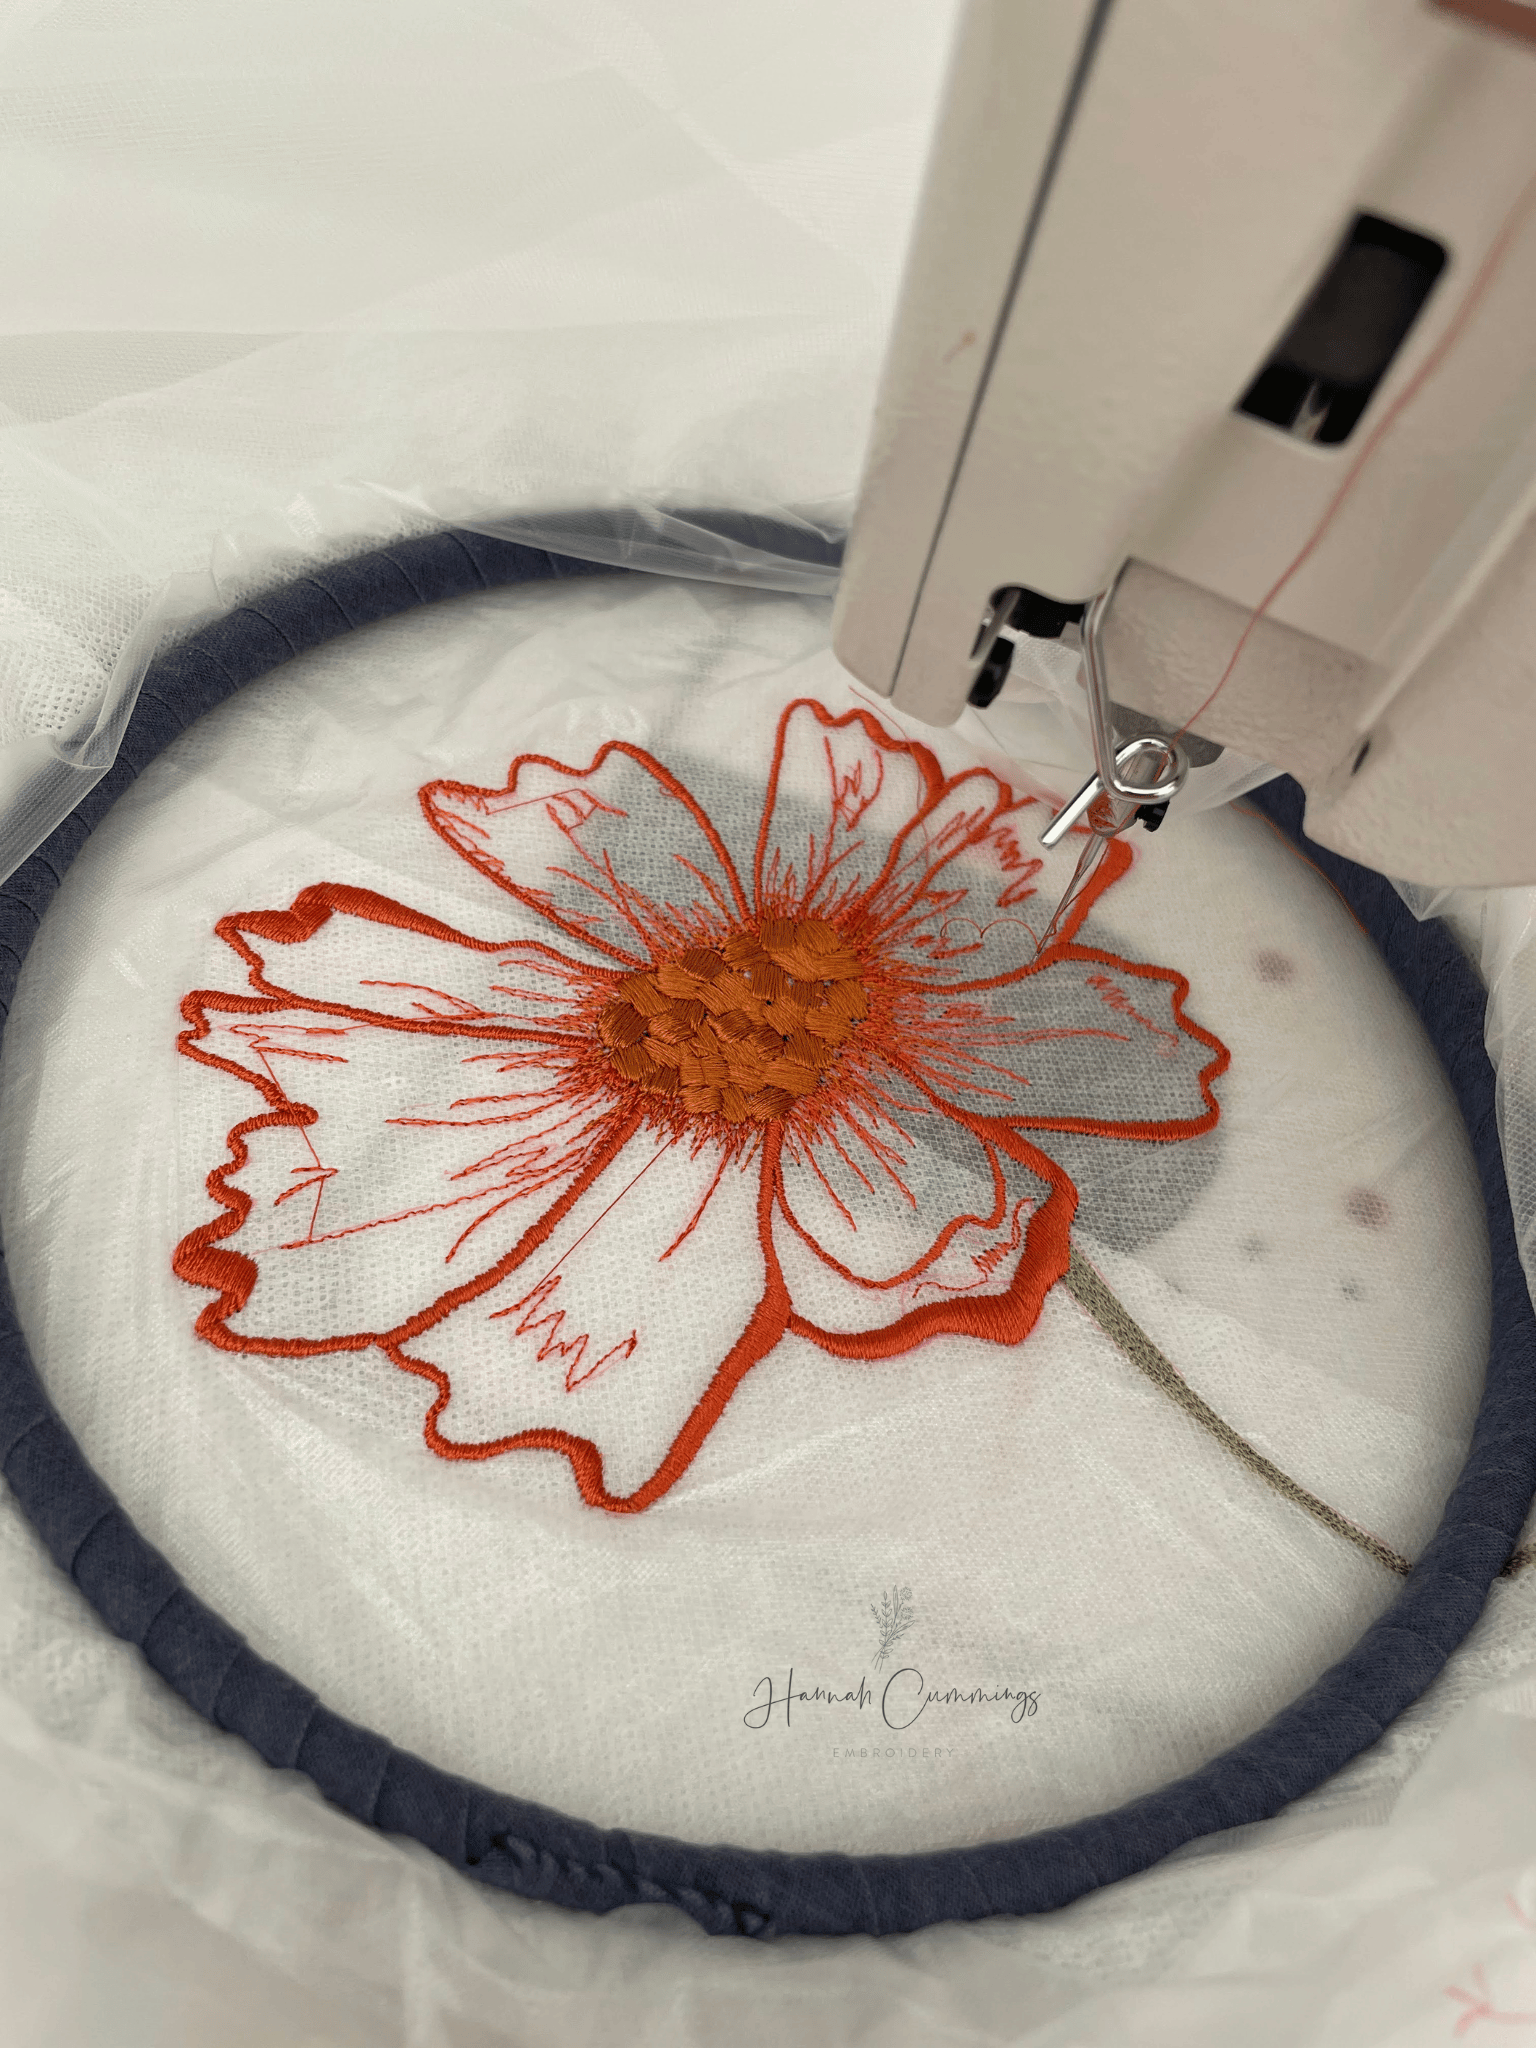  Orange flower being embroidered at sewing machine 